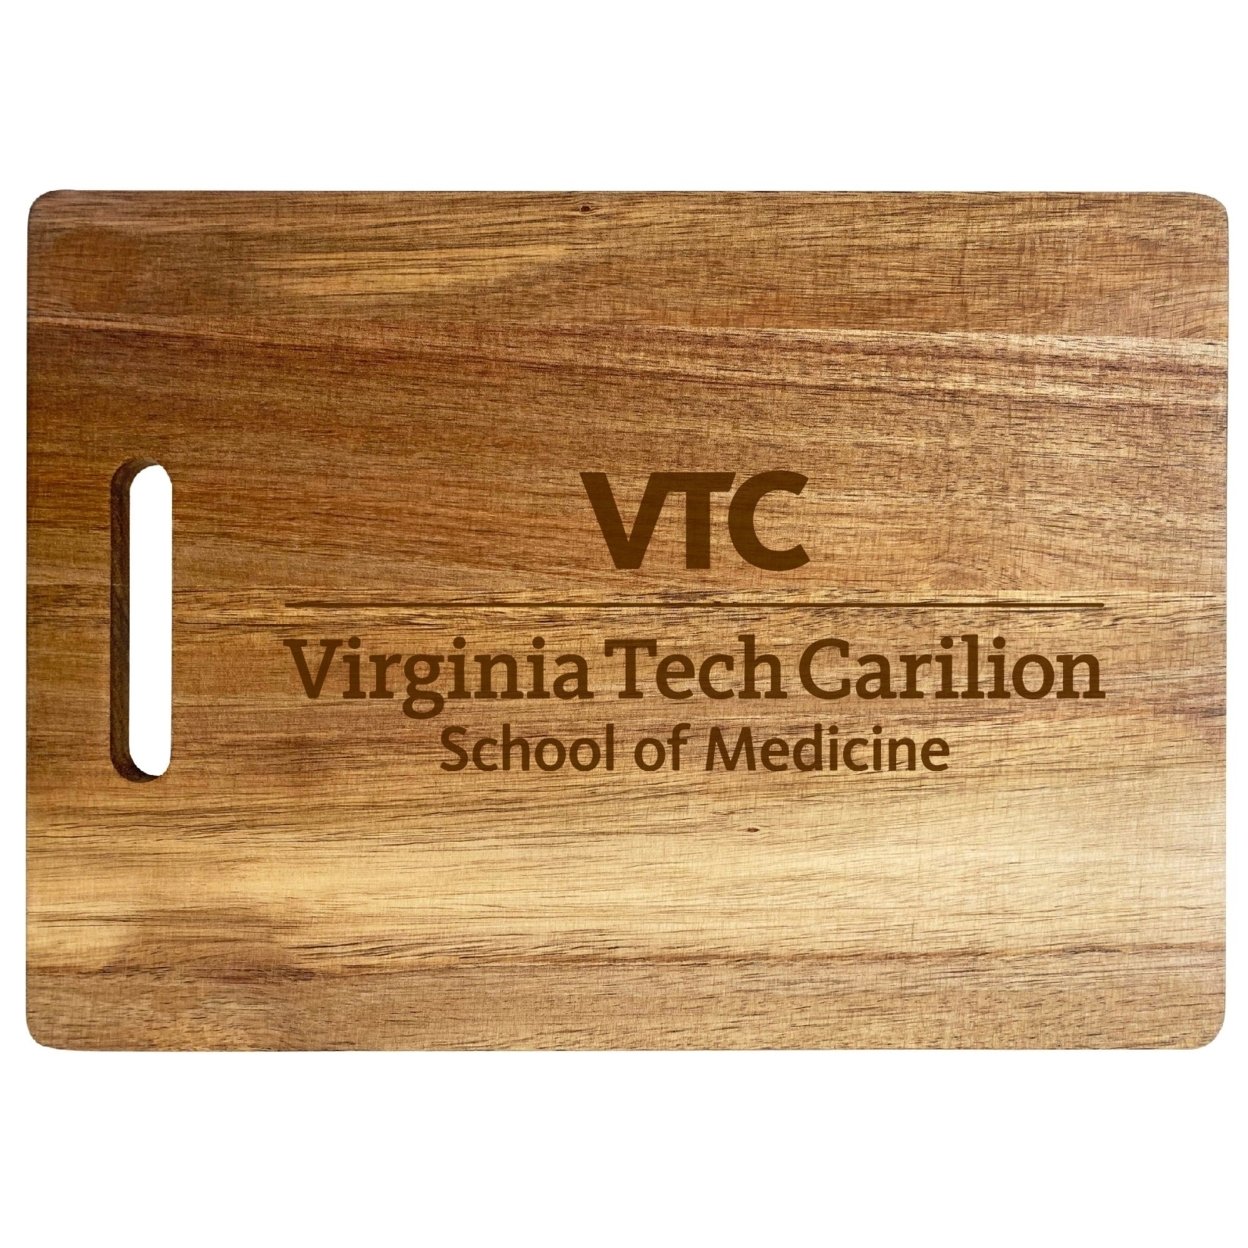 R & R INC. Virginia Tech Carilion School of Medicine Engraved Wooden Cutting Board 10" x 14" Acacia Wood - Large Engraving